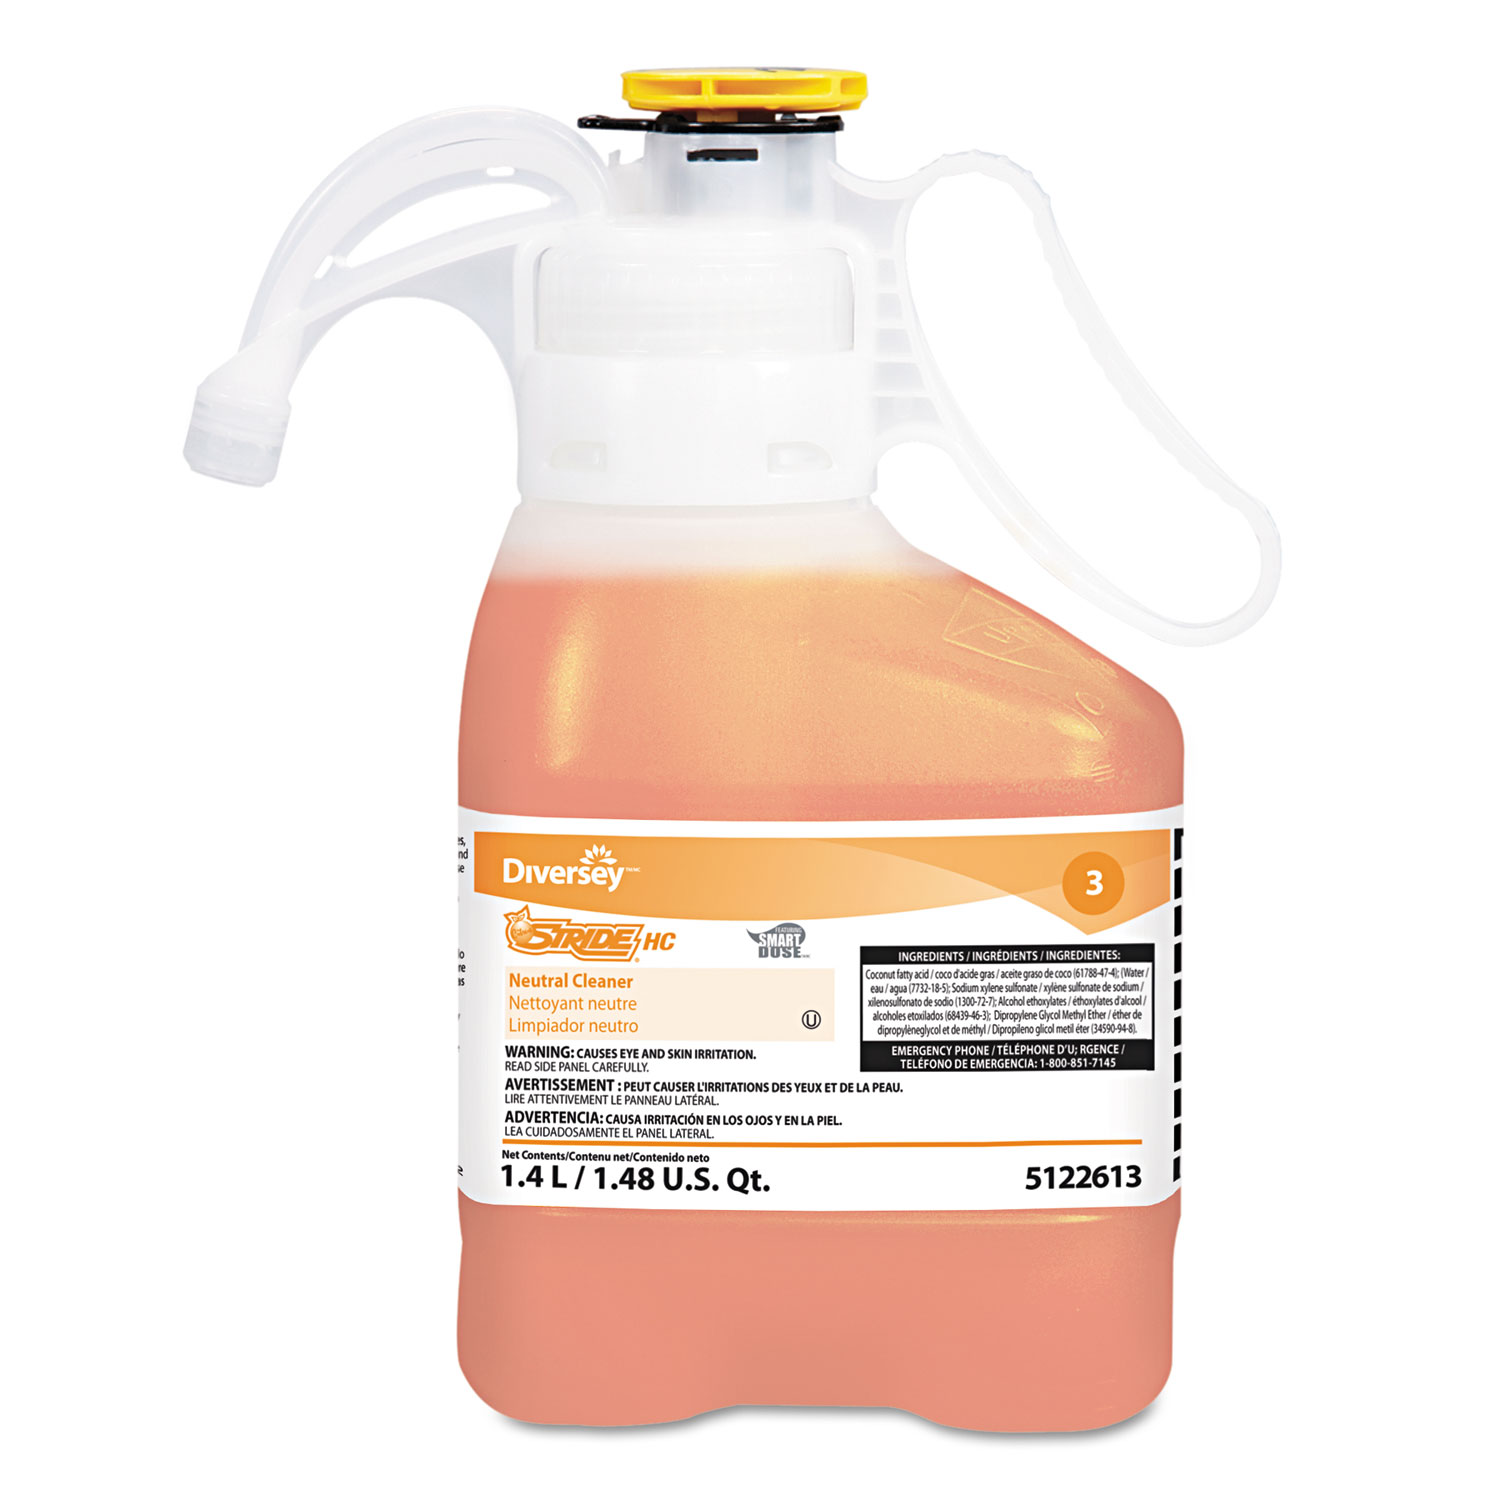  Diversey 95122613 Stride Neutral Cleaner, Citrus Scent, 1.4 mL, 2 Bottles/Carton (DVO95122613) 